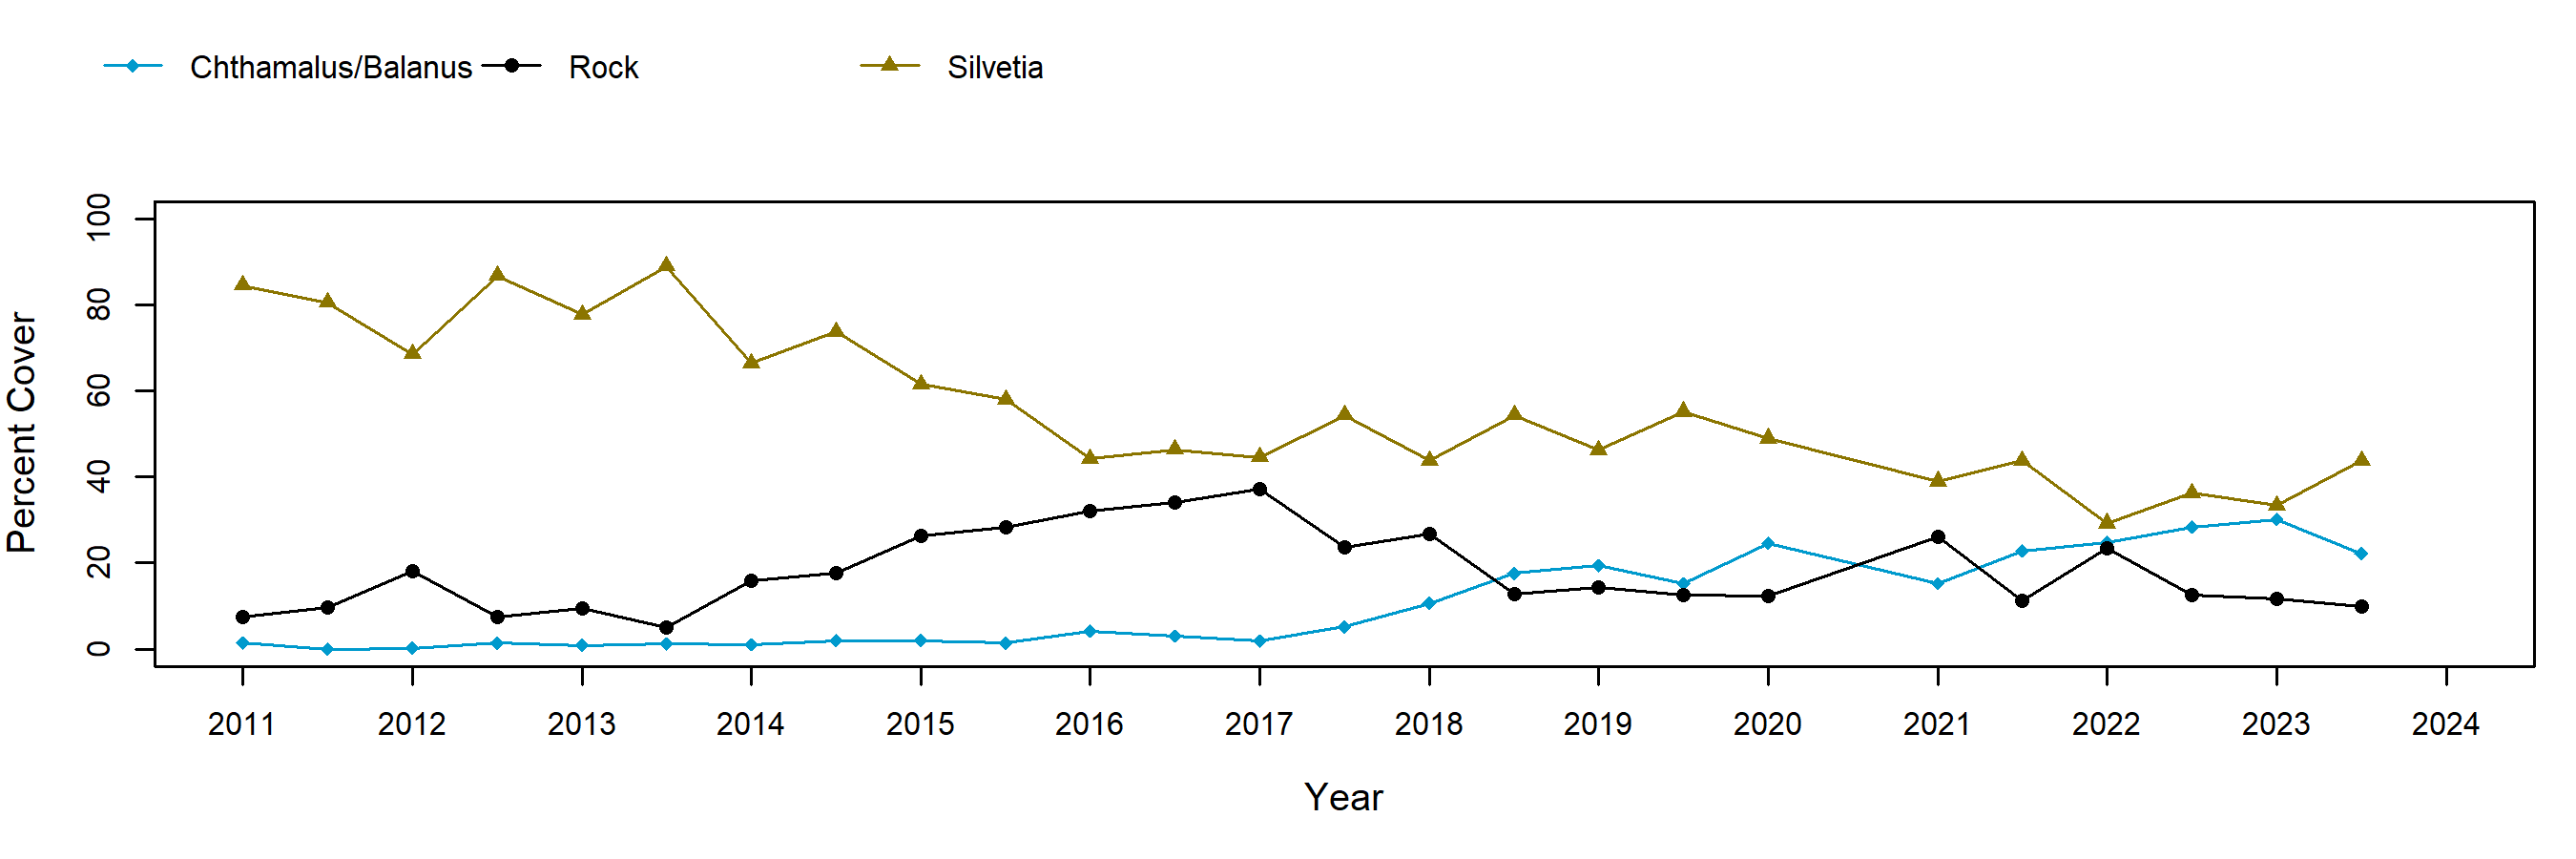 Eel Point Cove Silvetia trend plot